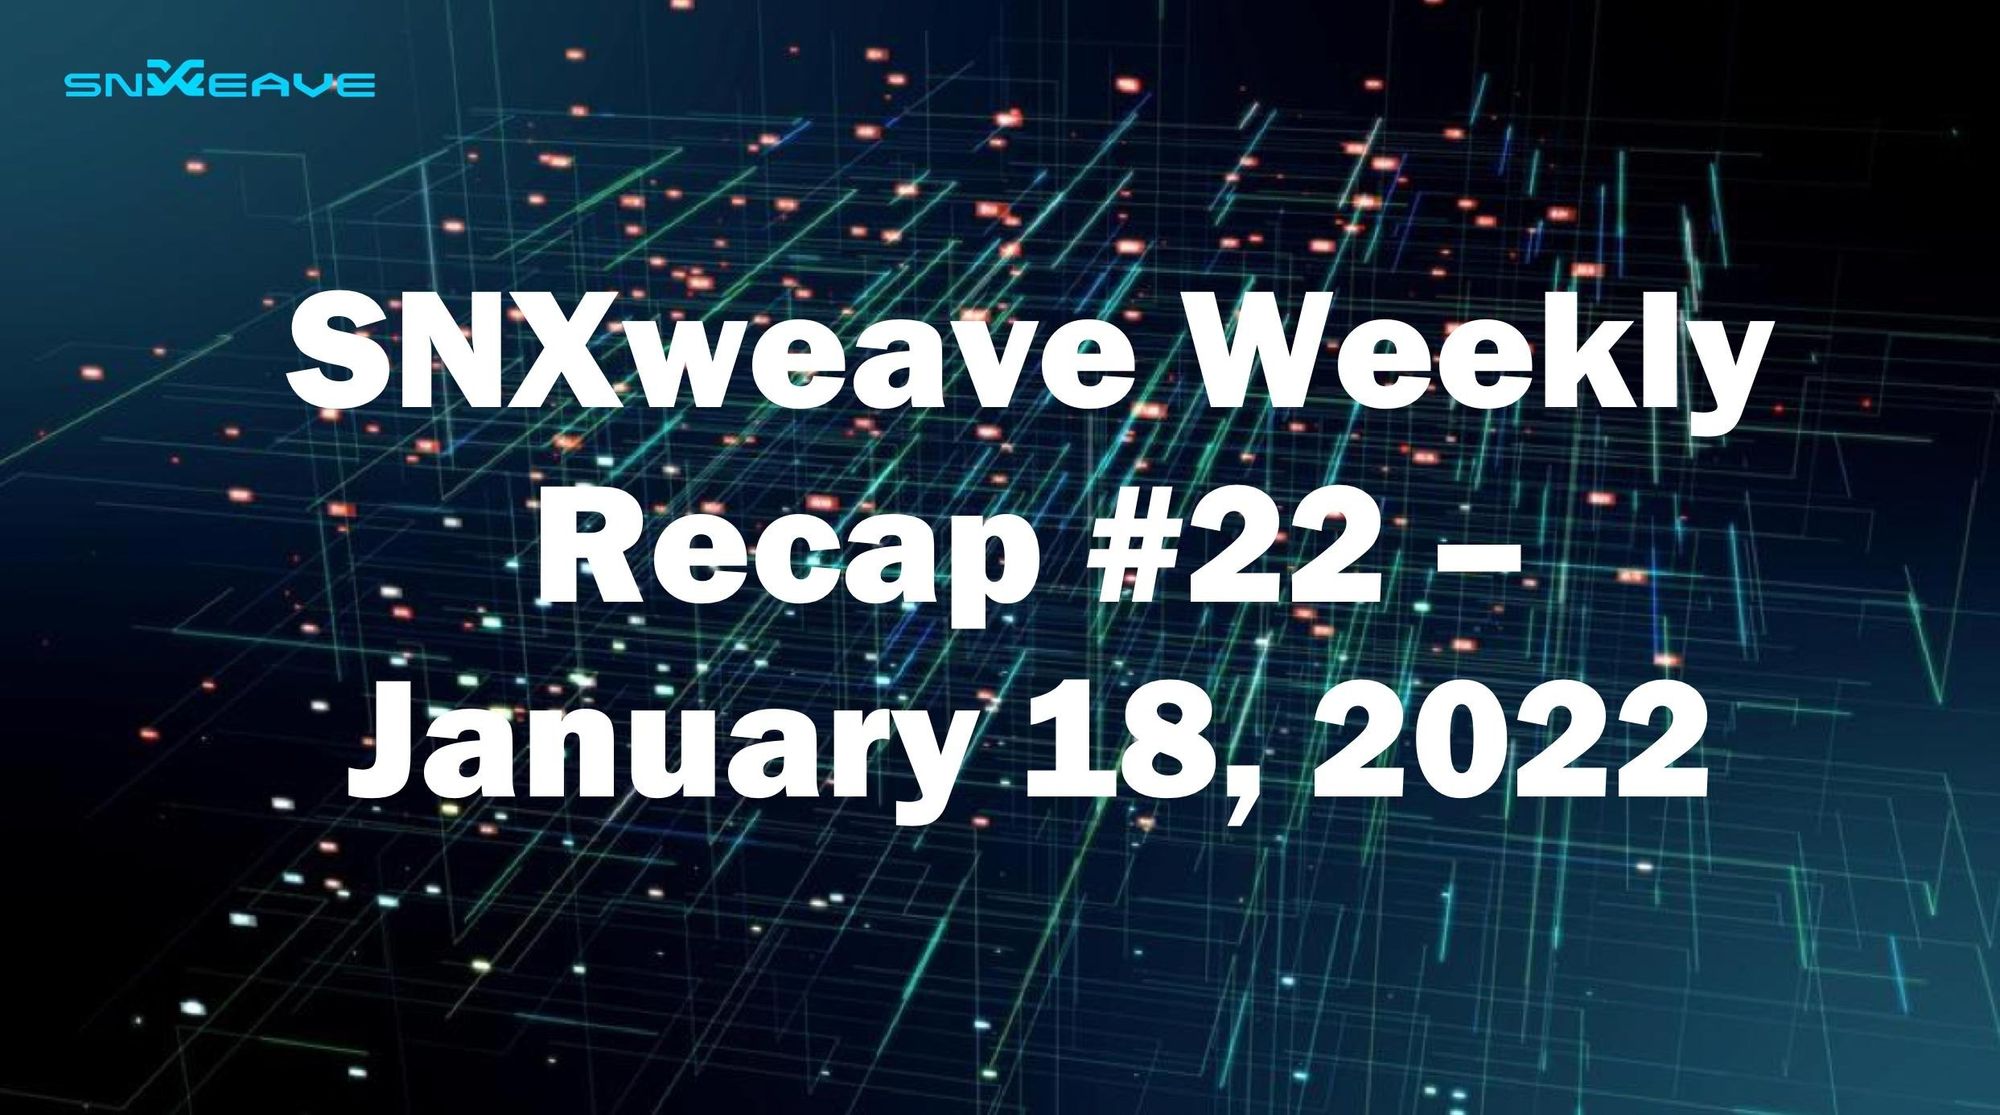 SNXweave Weekly Recap 22